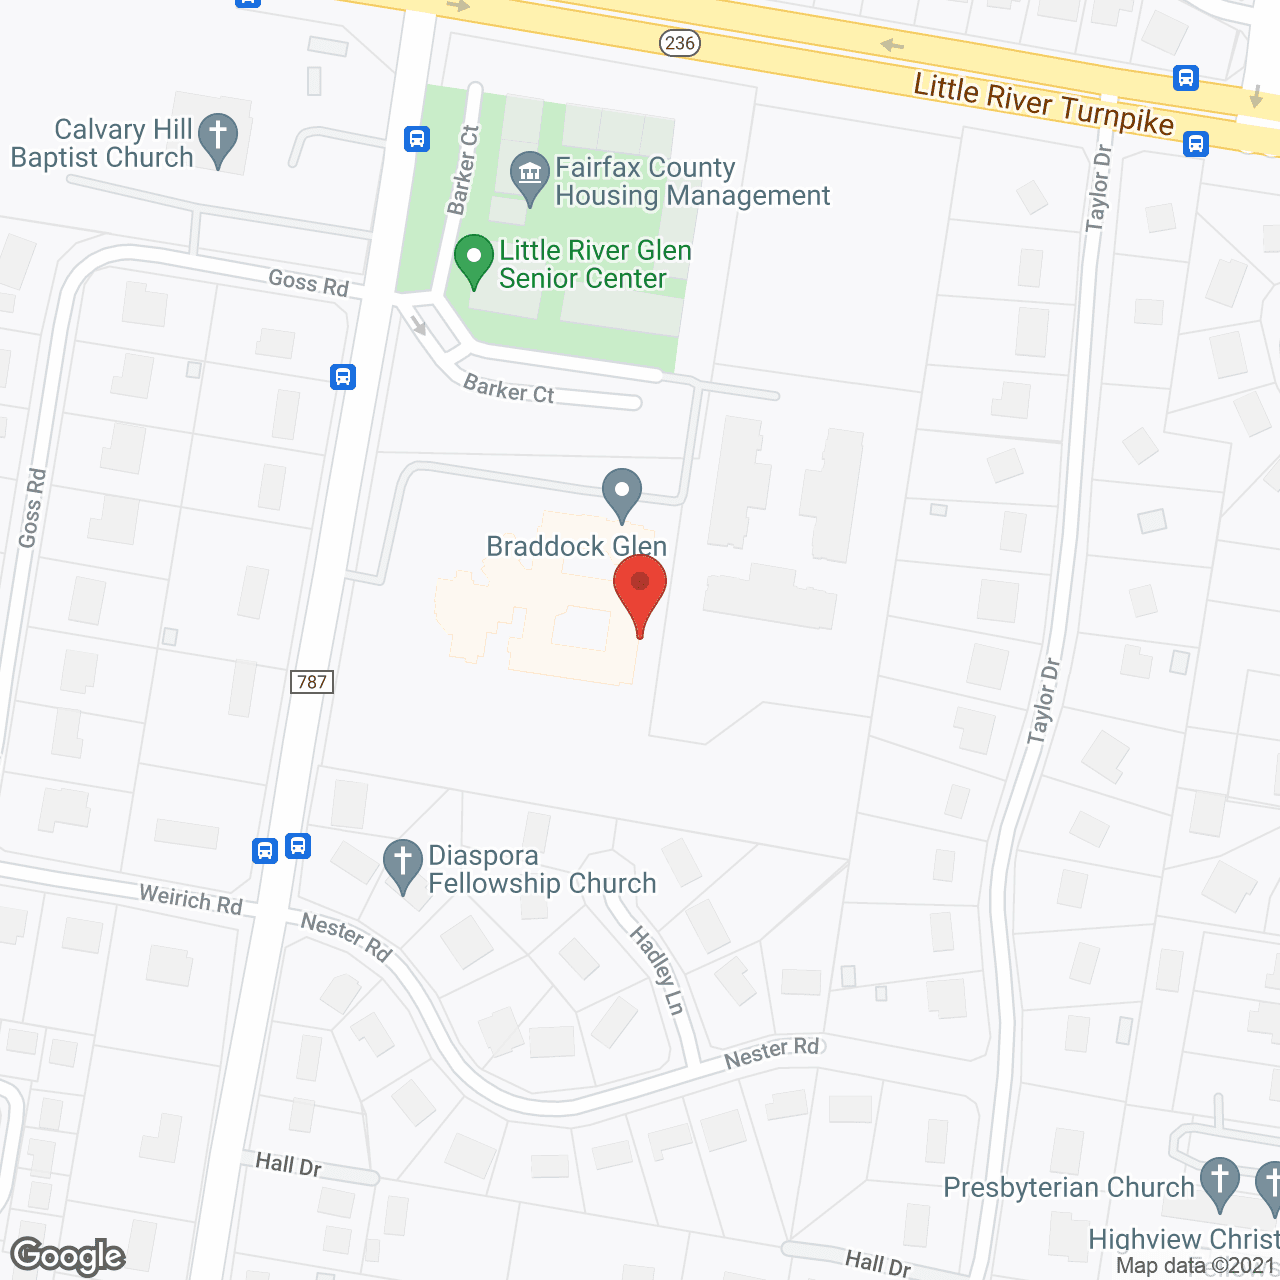 Sunrise Braddock Glen in google map